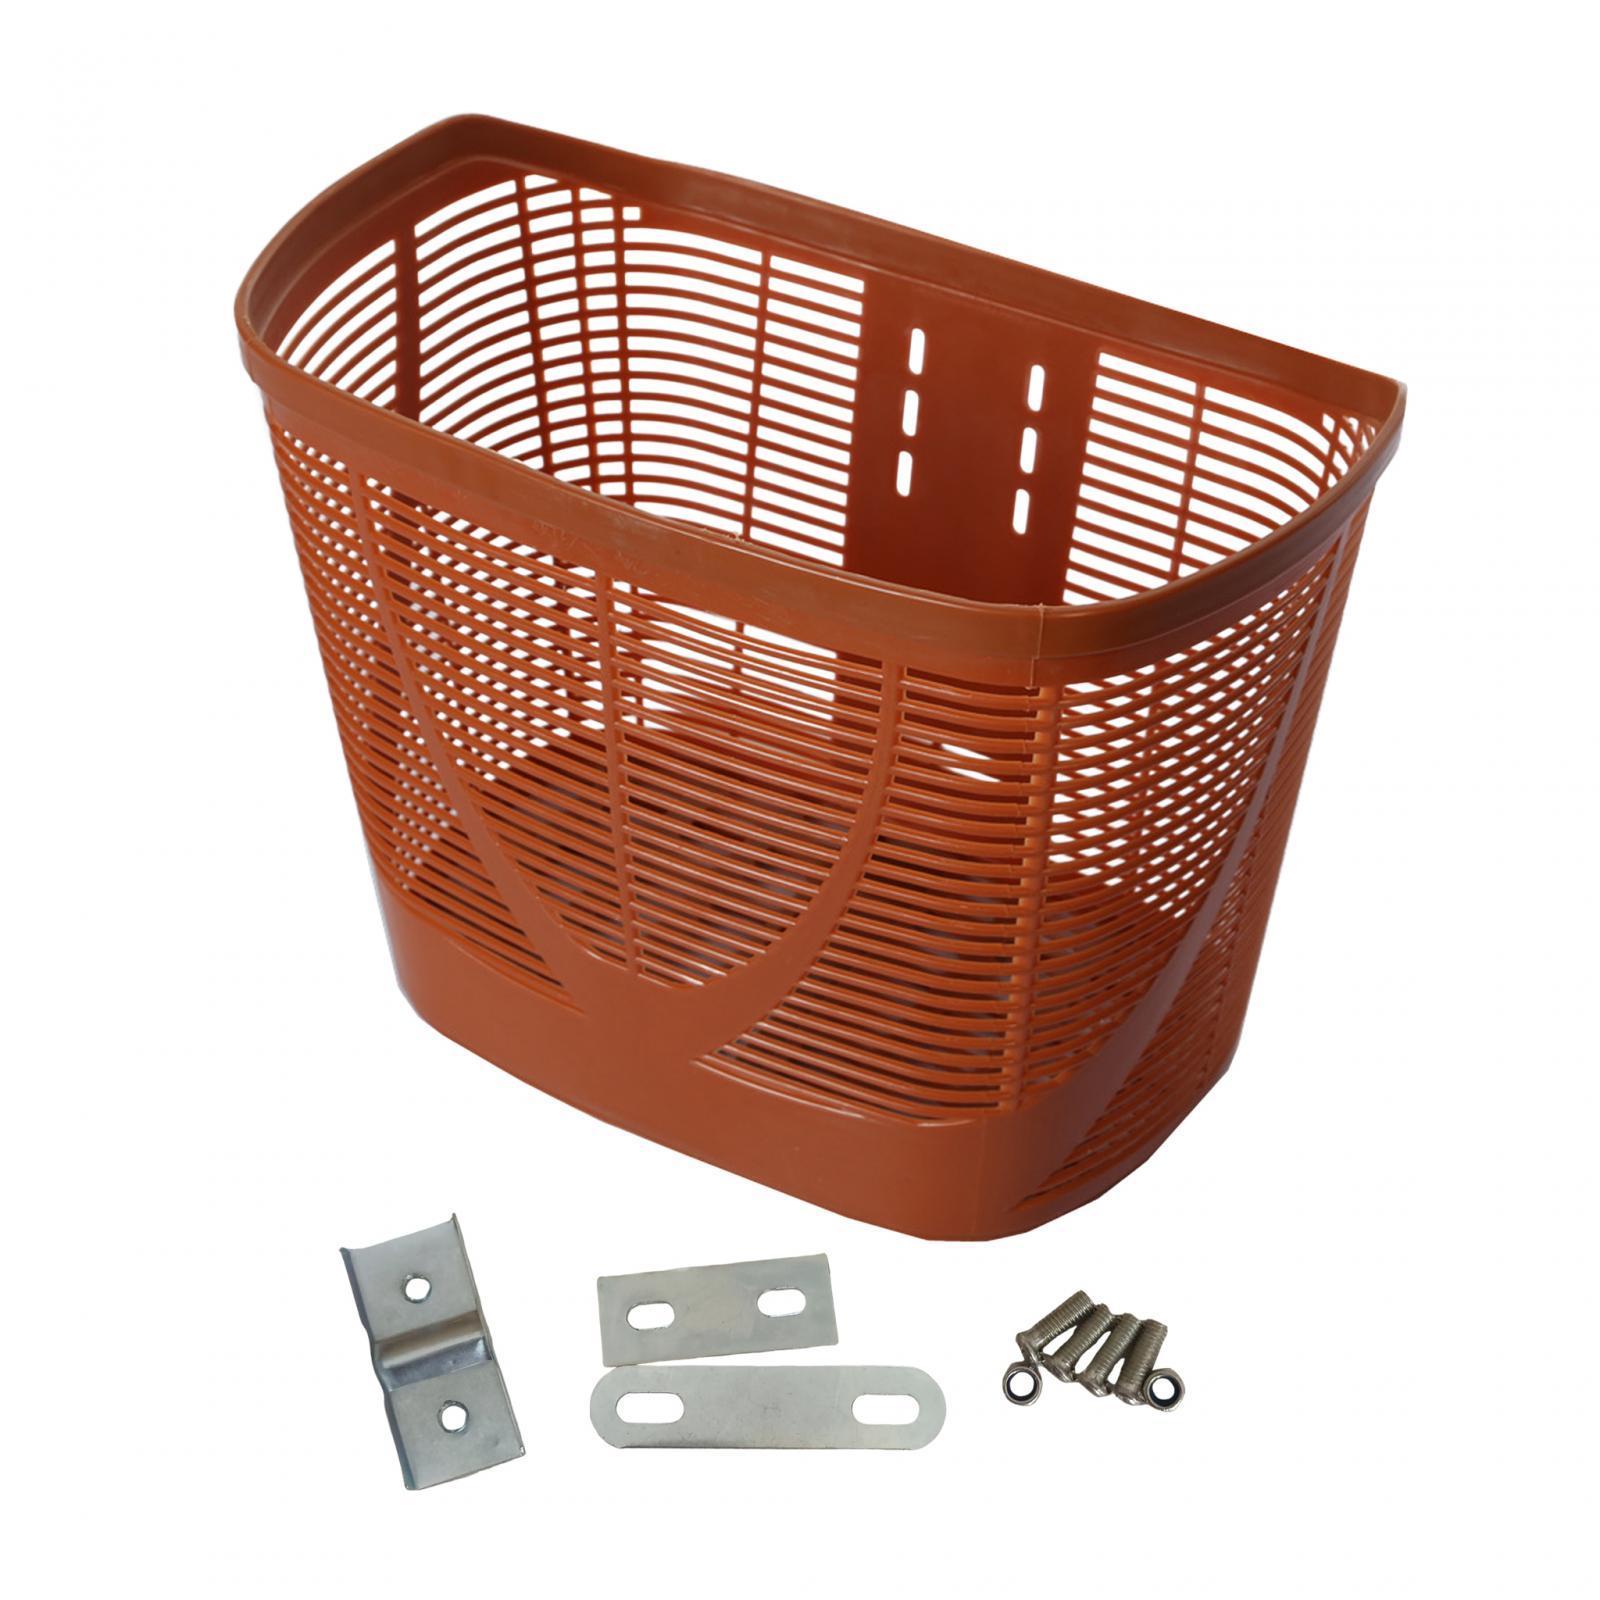 Bike Basket Front Basket Easy to Install Organizer Universal  Cargo Rack Storage Basket for Camping Shopping Bike Accessories